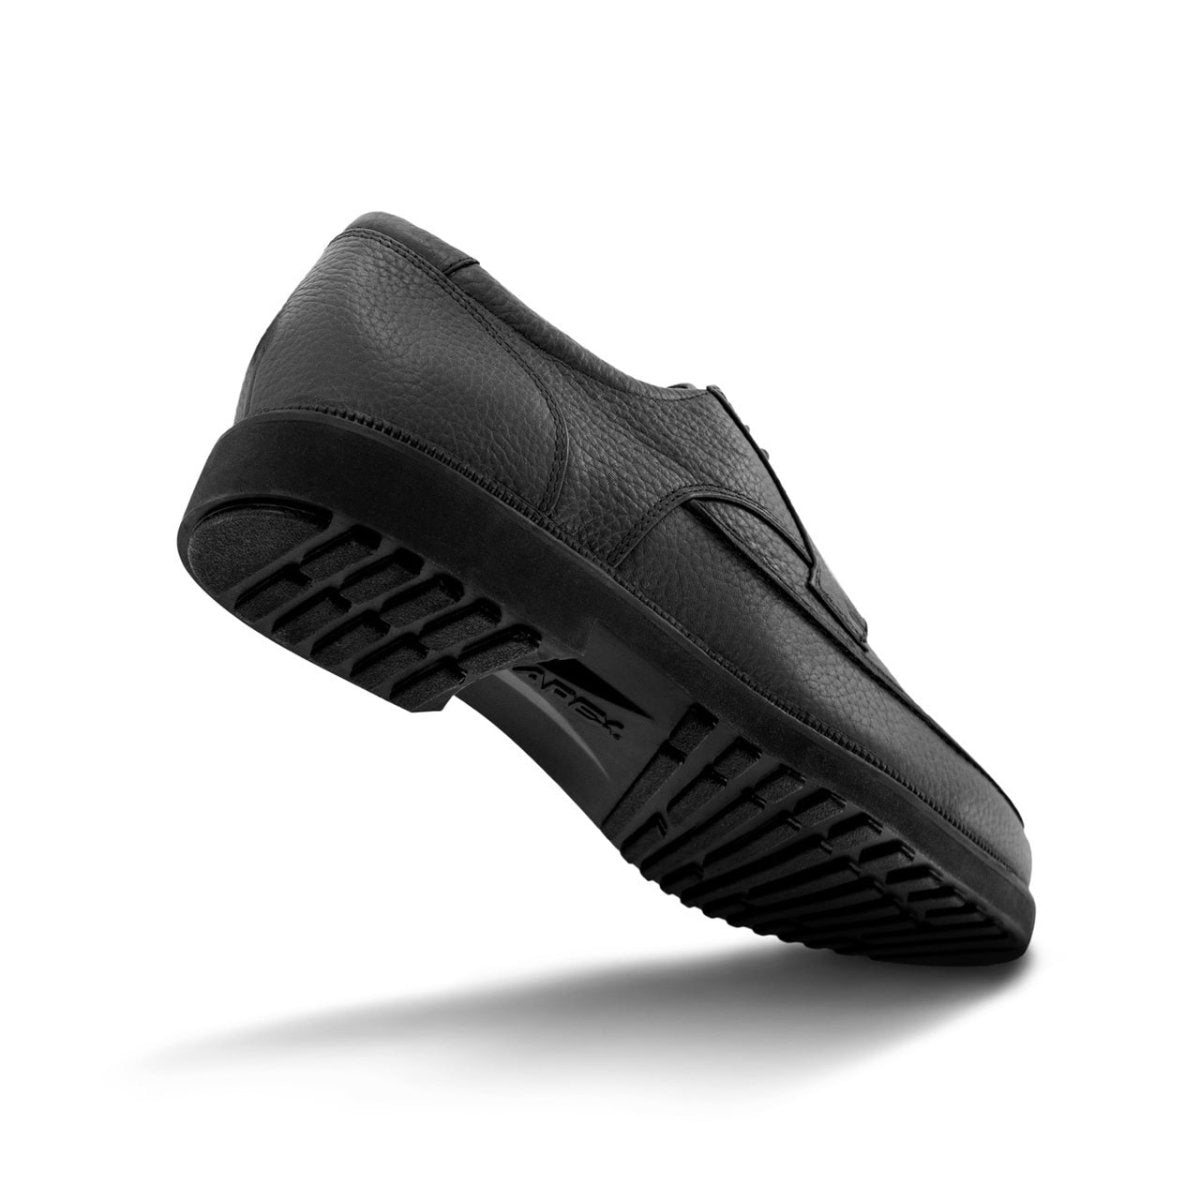 APEX LEXINGTON MOC TOE MEN'S OXFORD DRESS SHOE IN BLACK - TLW Shoes